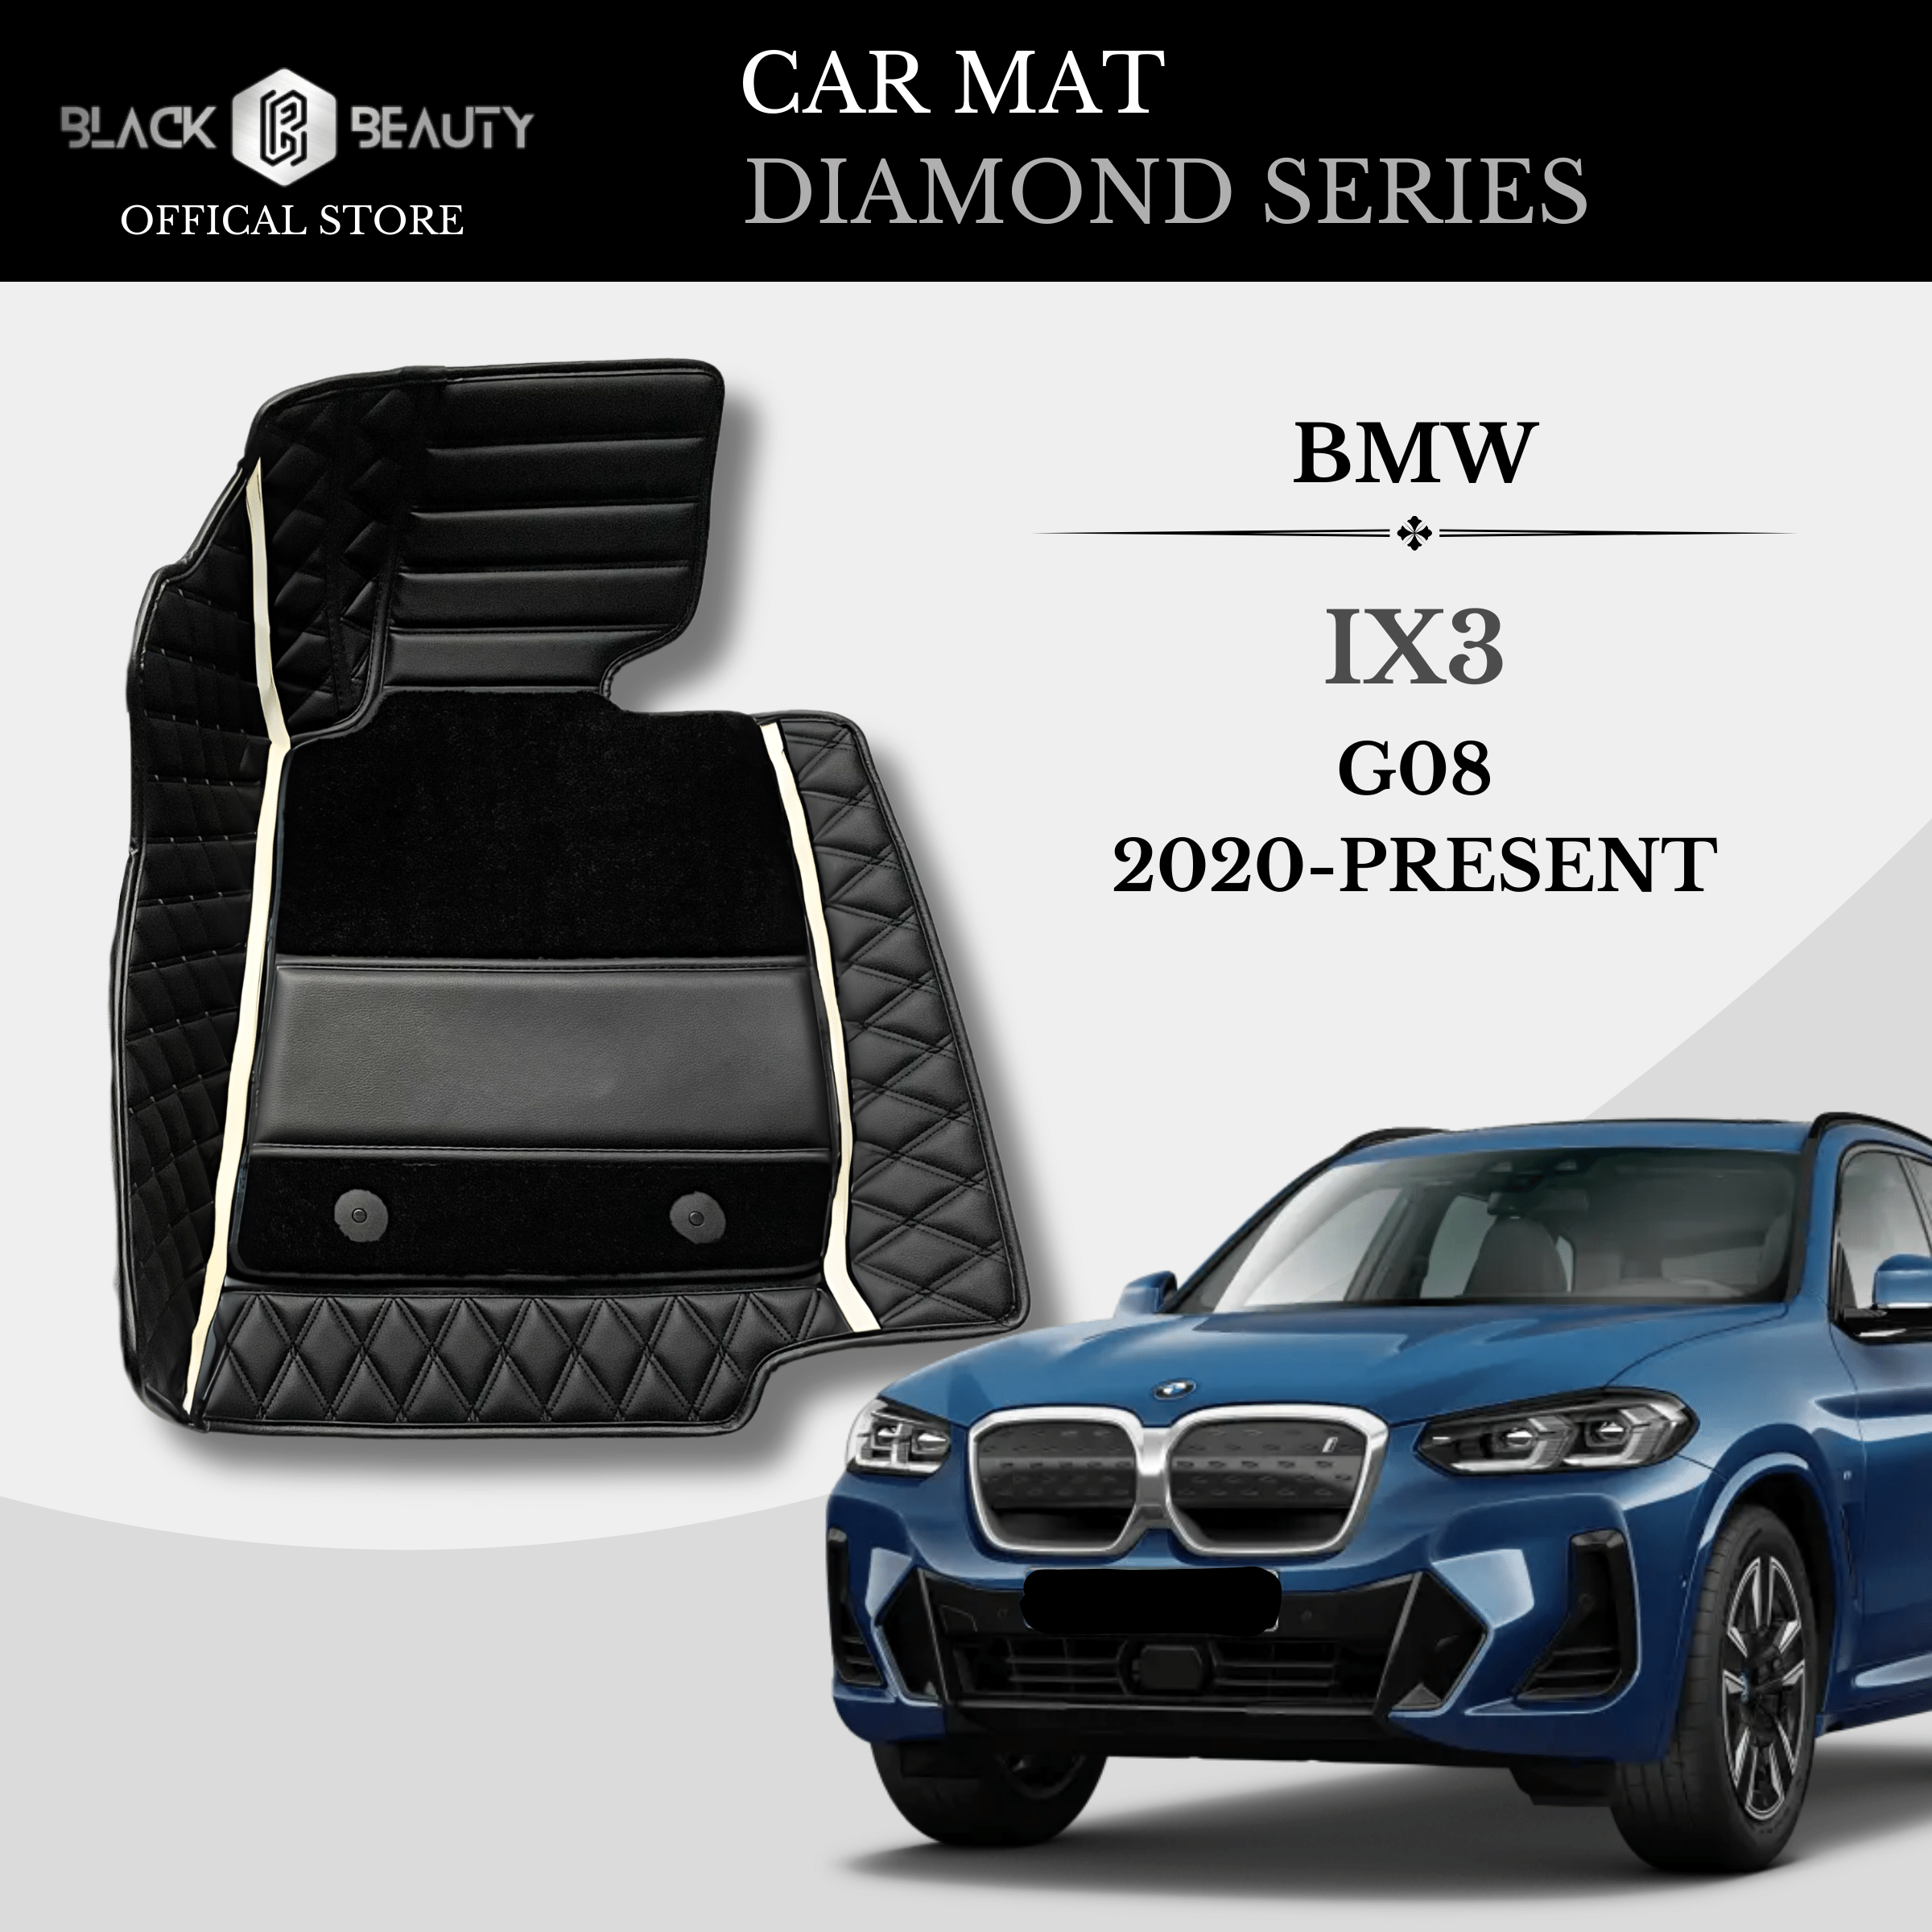 BMW iX3 G08 (2020-Present) - Diamond Series Car Mat